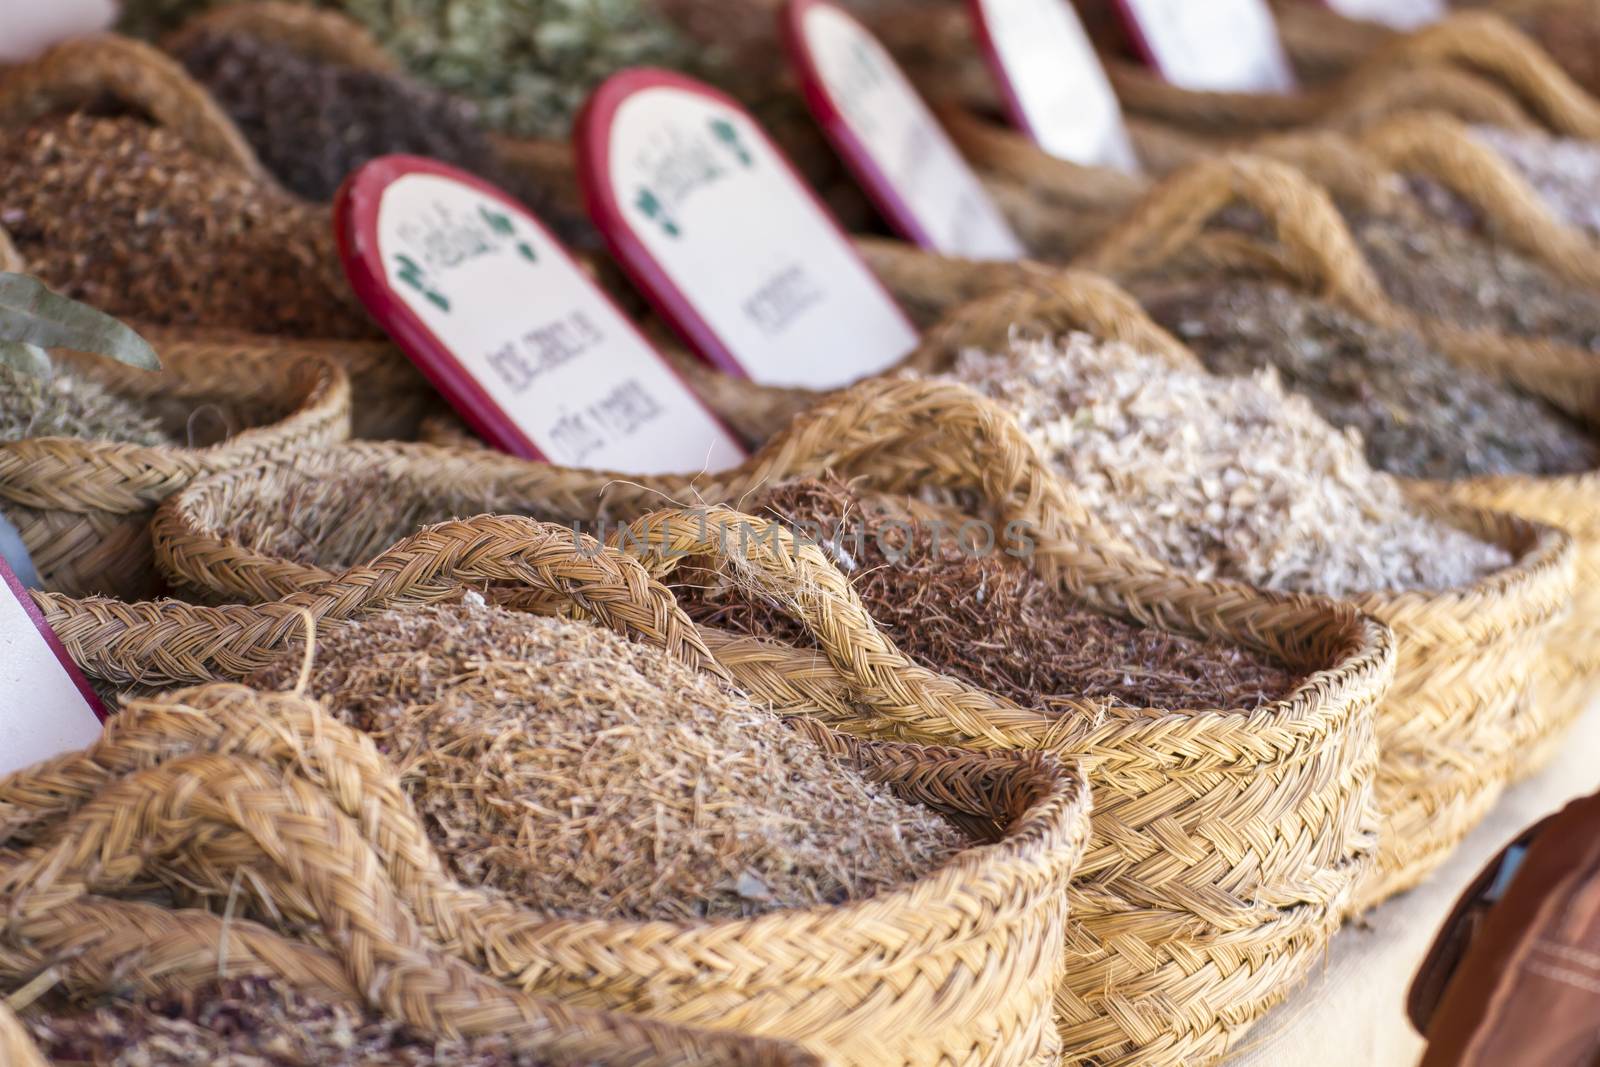 Herbal, wicker baskets stuffed medicinal healing herbs by FernandoCortes